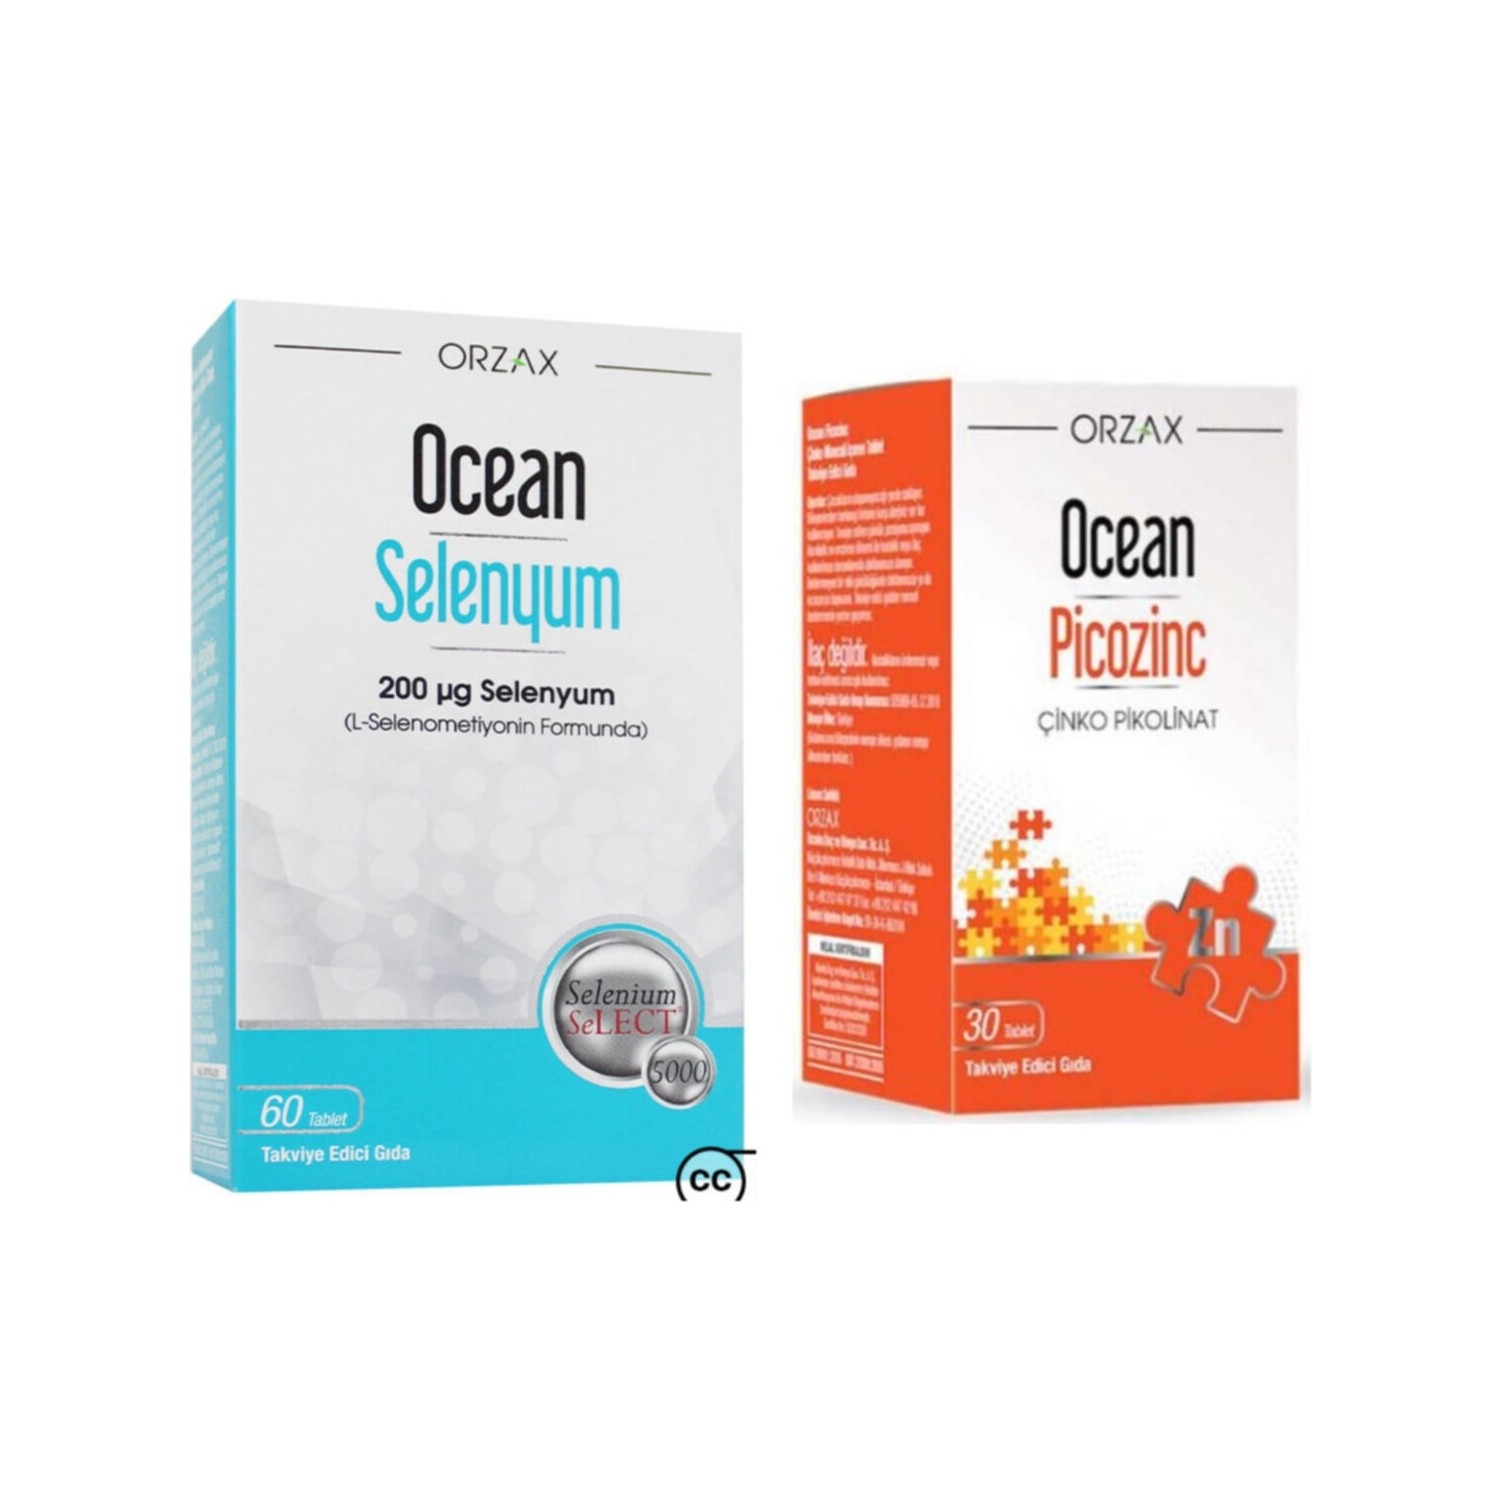 Селен Ocean 200 мкг, 60 таблеток + Пищевая добавка Ocean Picozinc Cinko Picolinate, 30 капсул